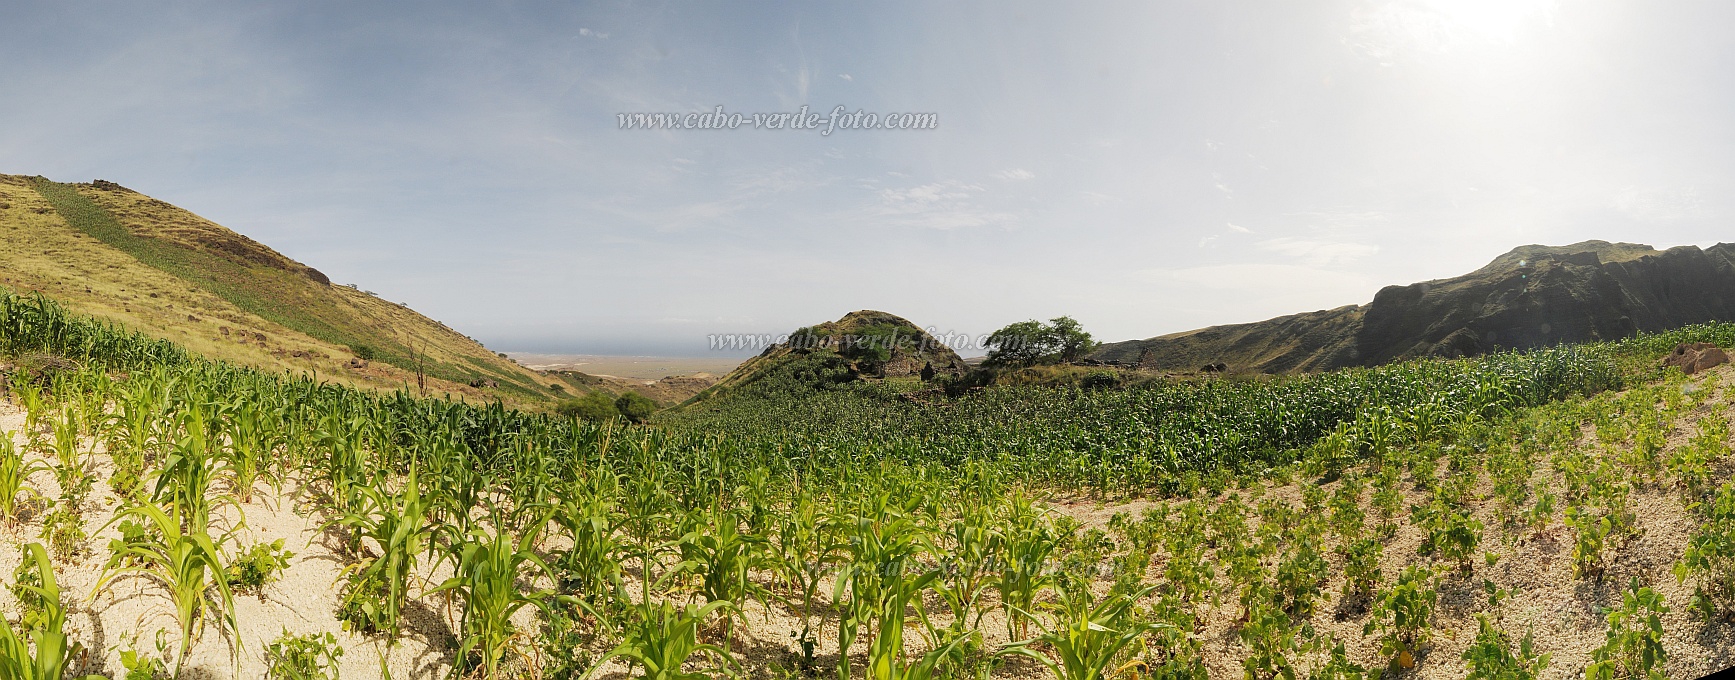 Santo Anto : Tabuleirinho da Tabuga : campo milho : Landscape AgricultureCabo Verde Foto Gallery